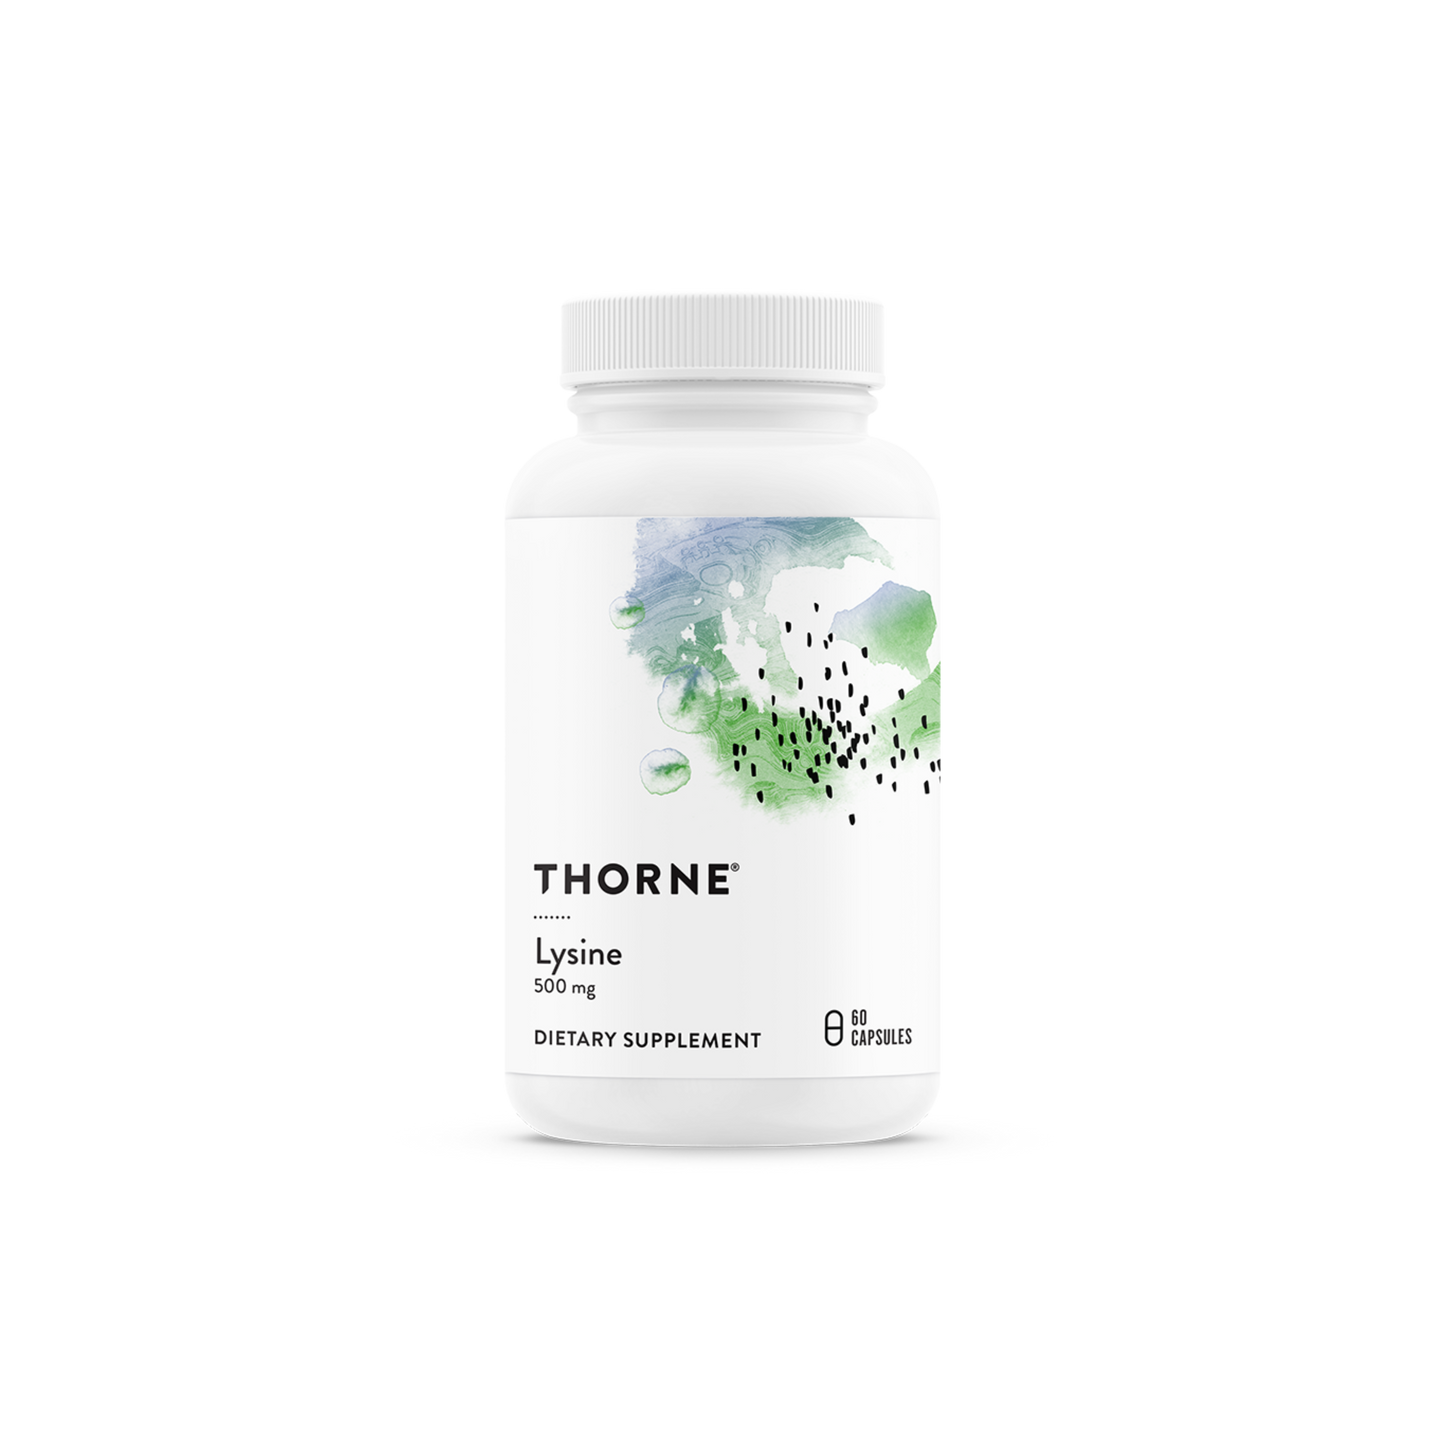 Thorne - Lysine